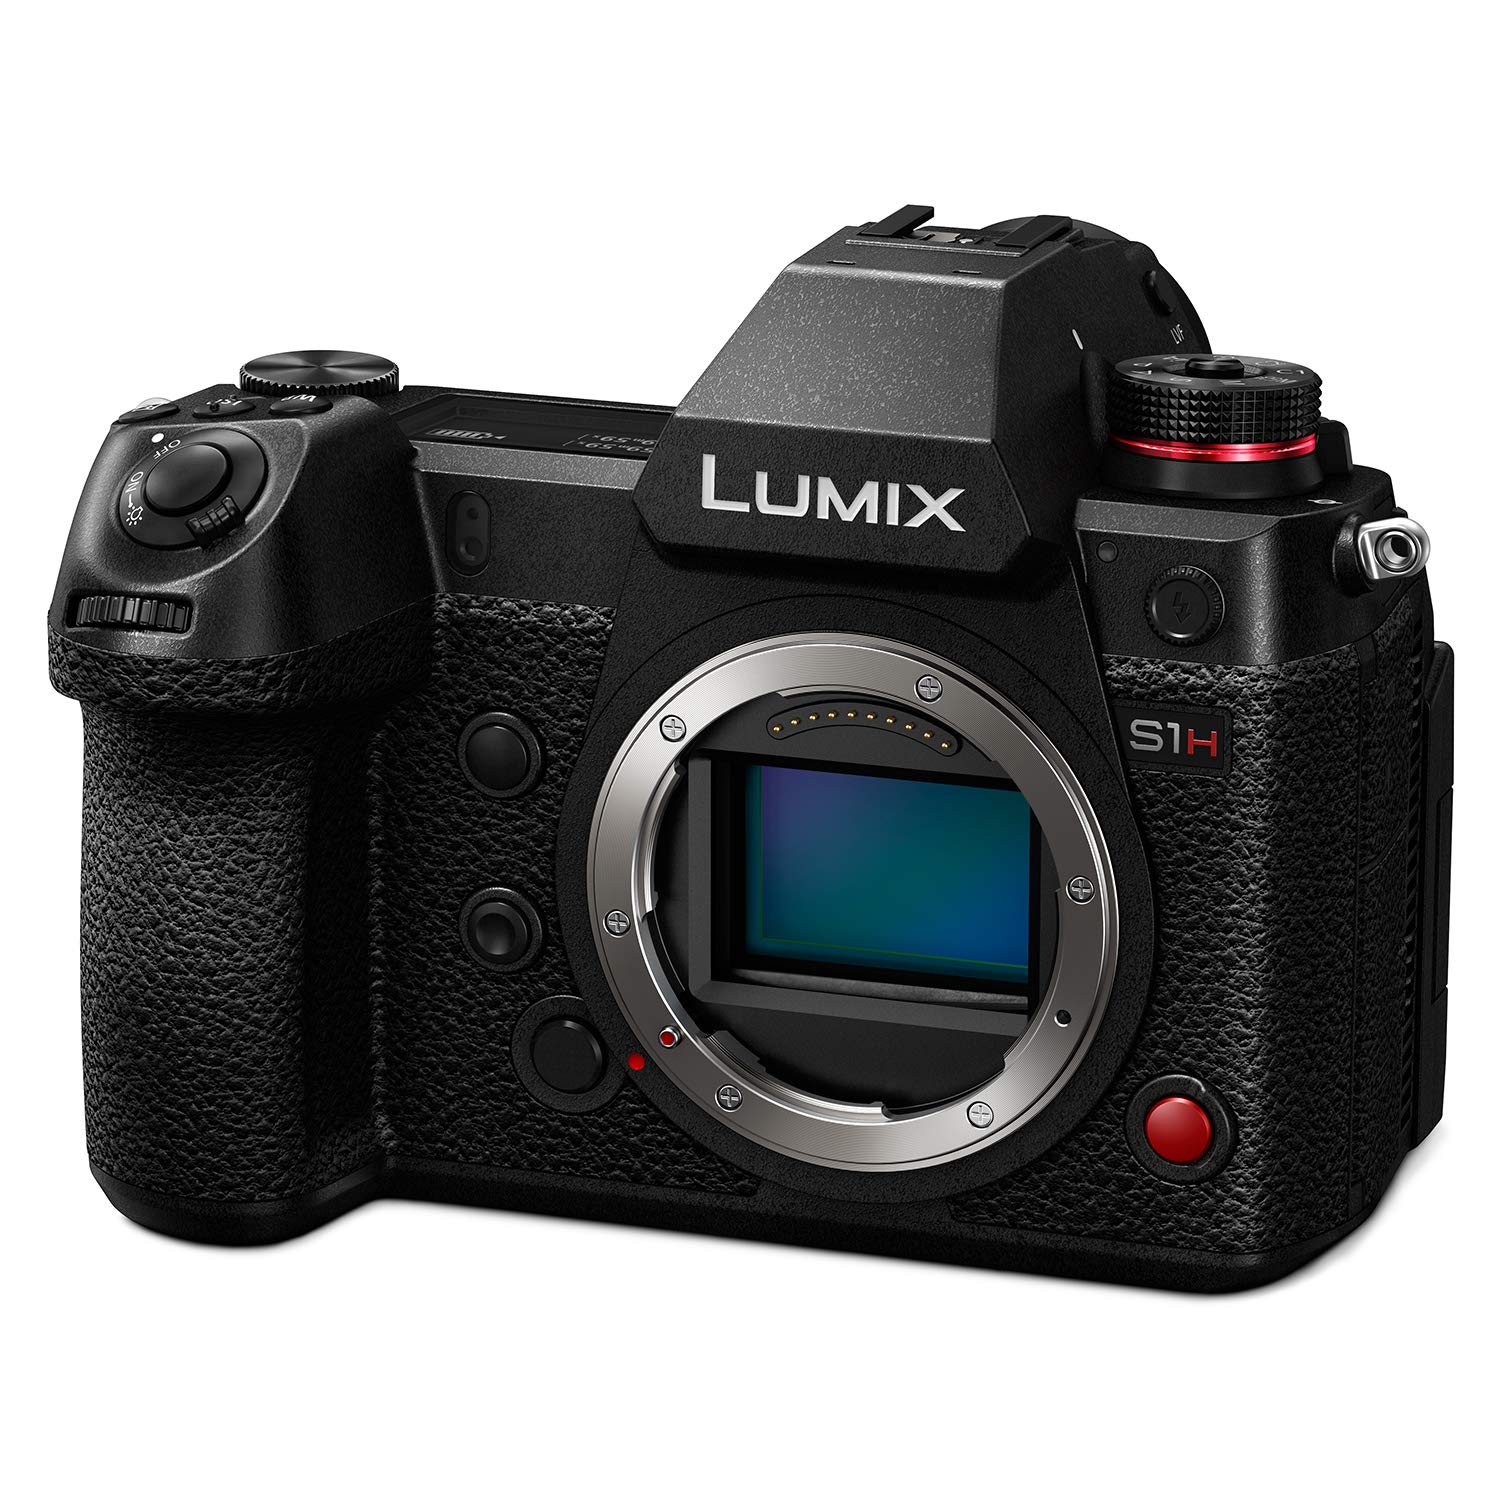 Panasonic पैनासोनिक LUMIX S1H मिररलेस डिजिटल कैमरा...